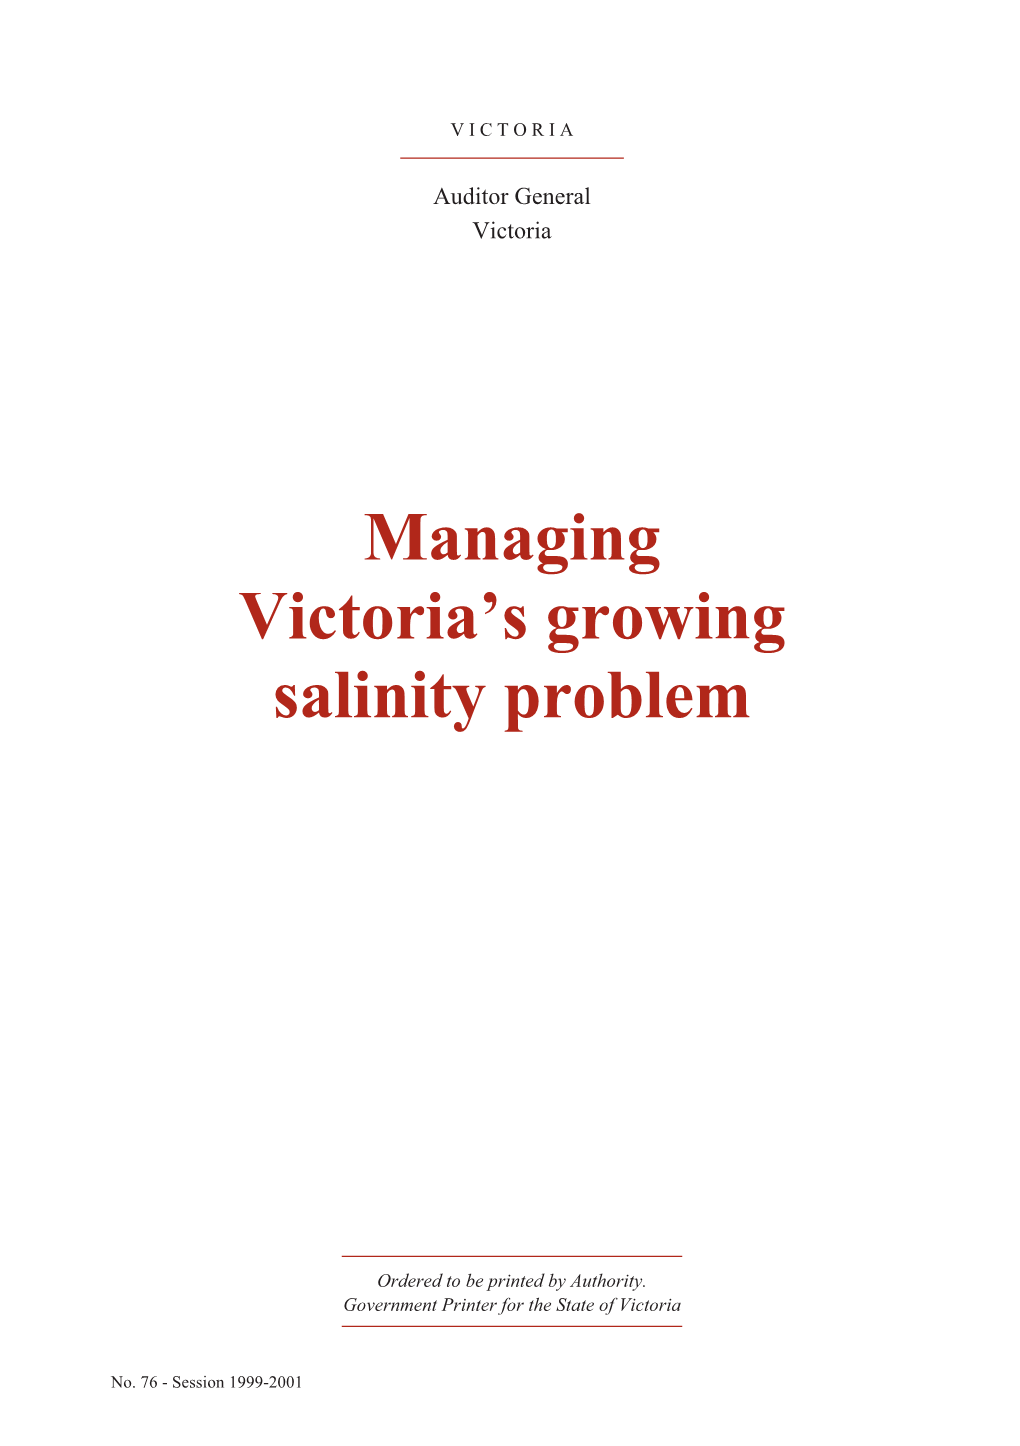 Managing Victoria's Growing Salinity Problem